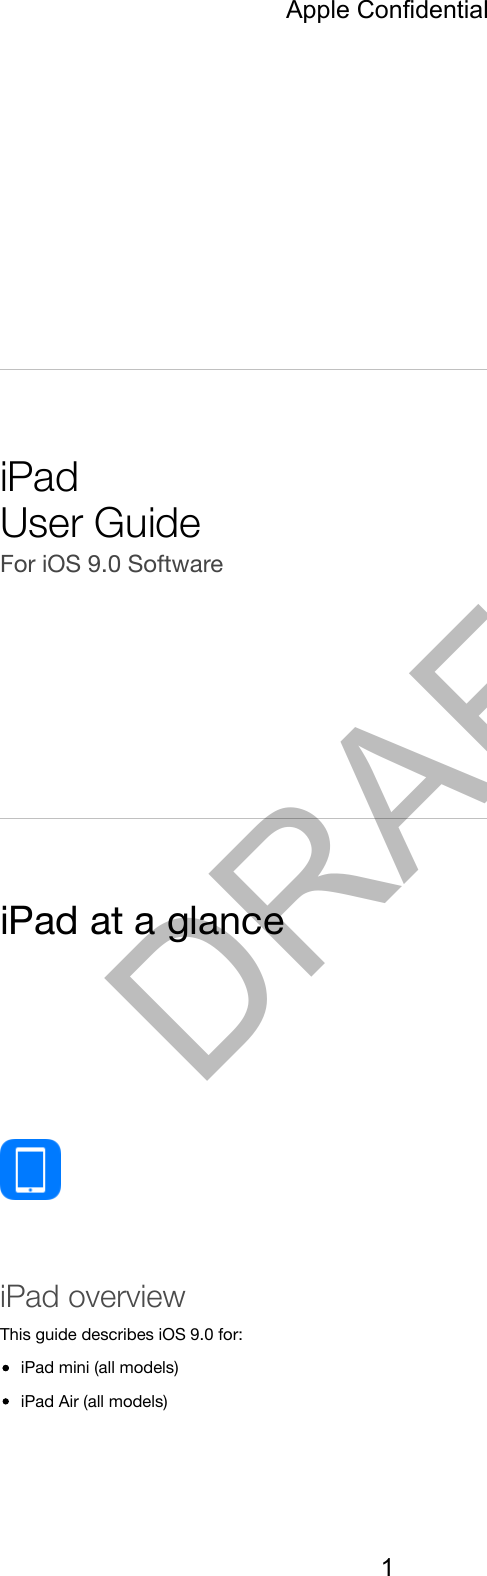 iPadUser GuideFor iOS 9.0 SoftwareiPad at a glanceiPad overviewThis guide describes iOS 9.0 for:iPad mini (all models)iPad Air (all models)Apple Confidential1DRAFT